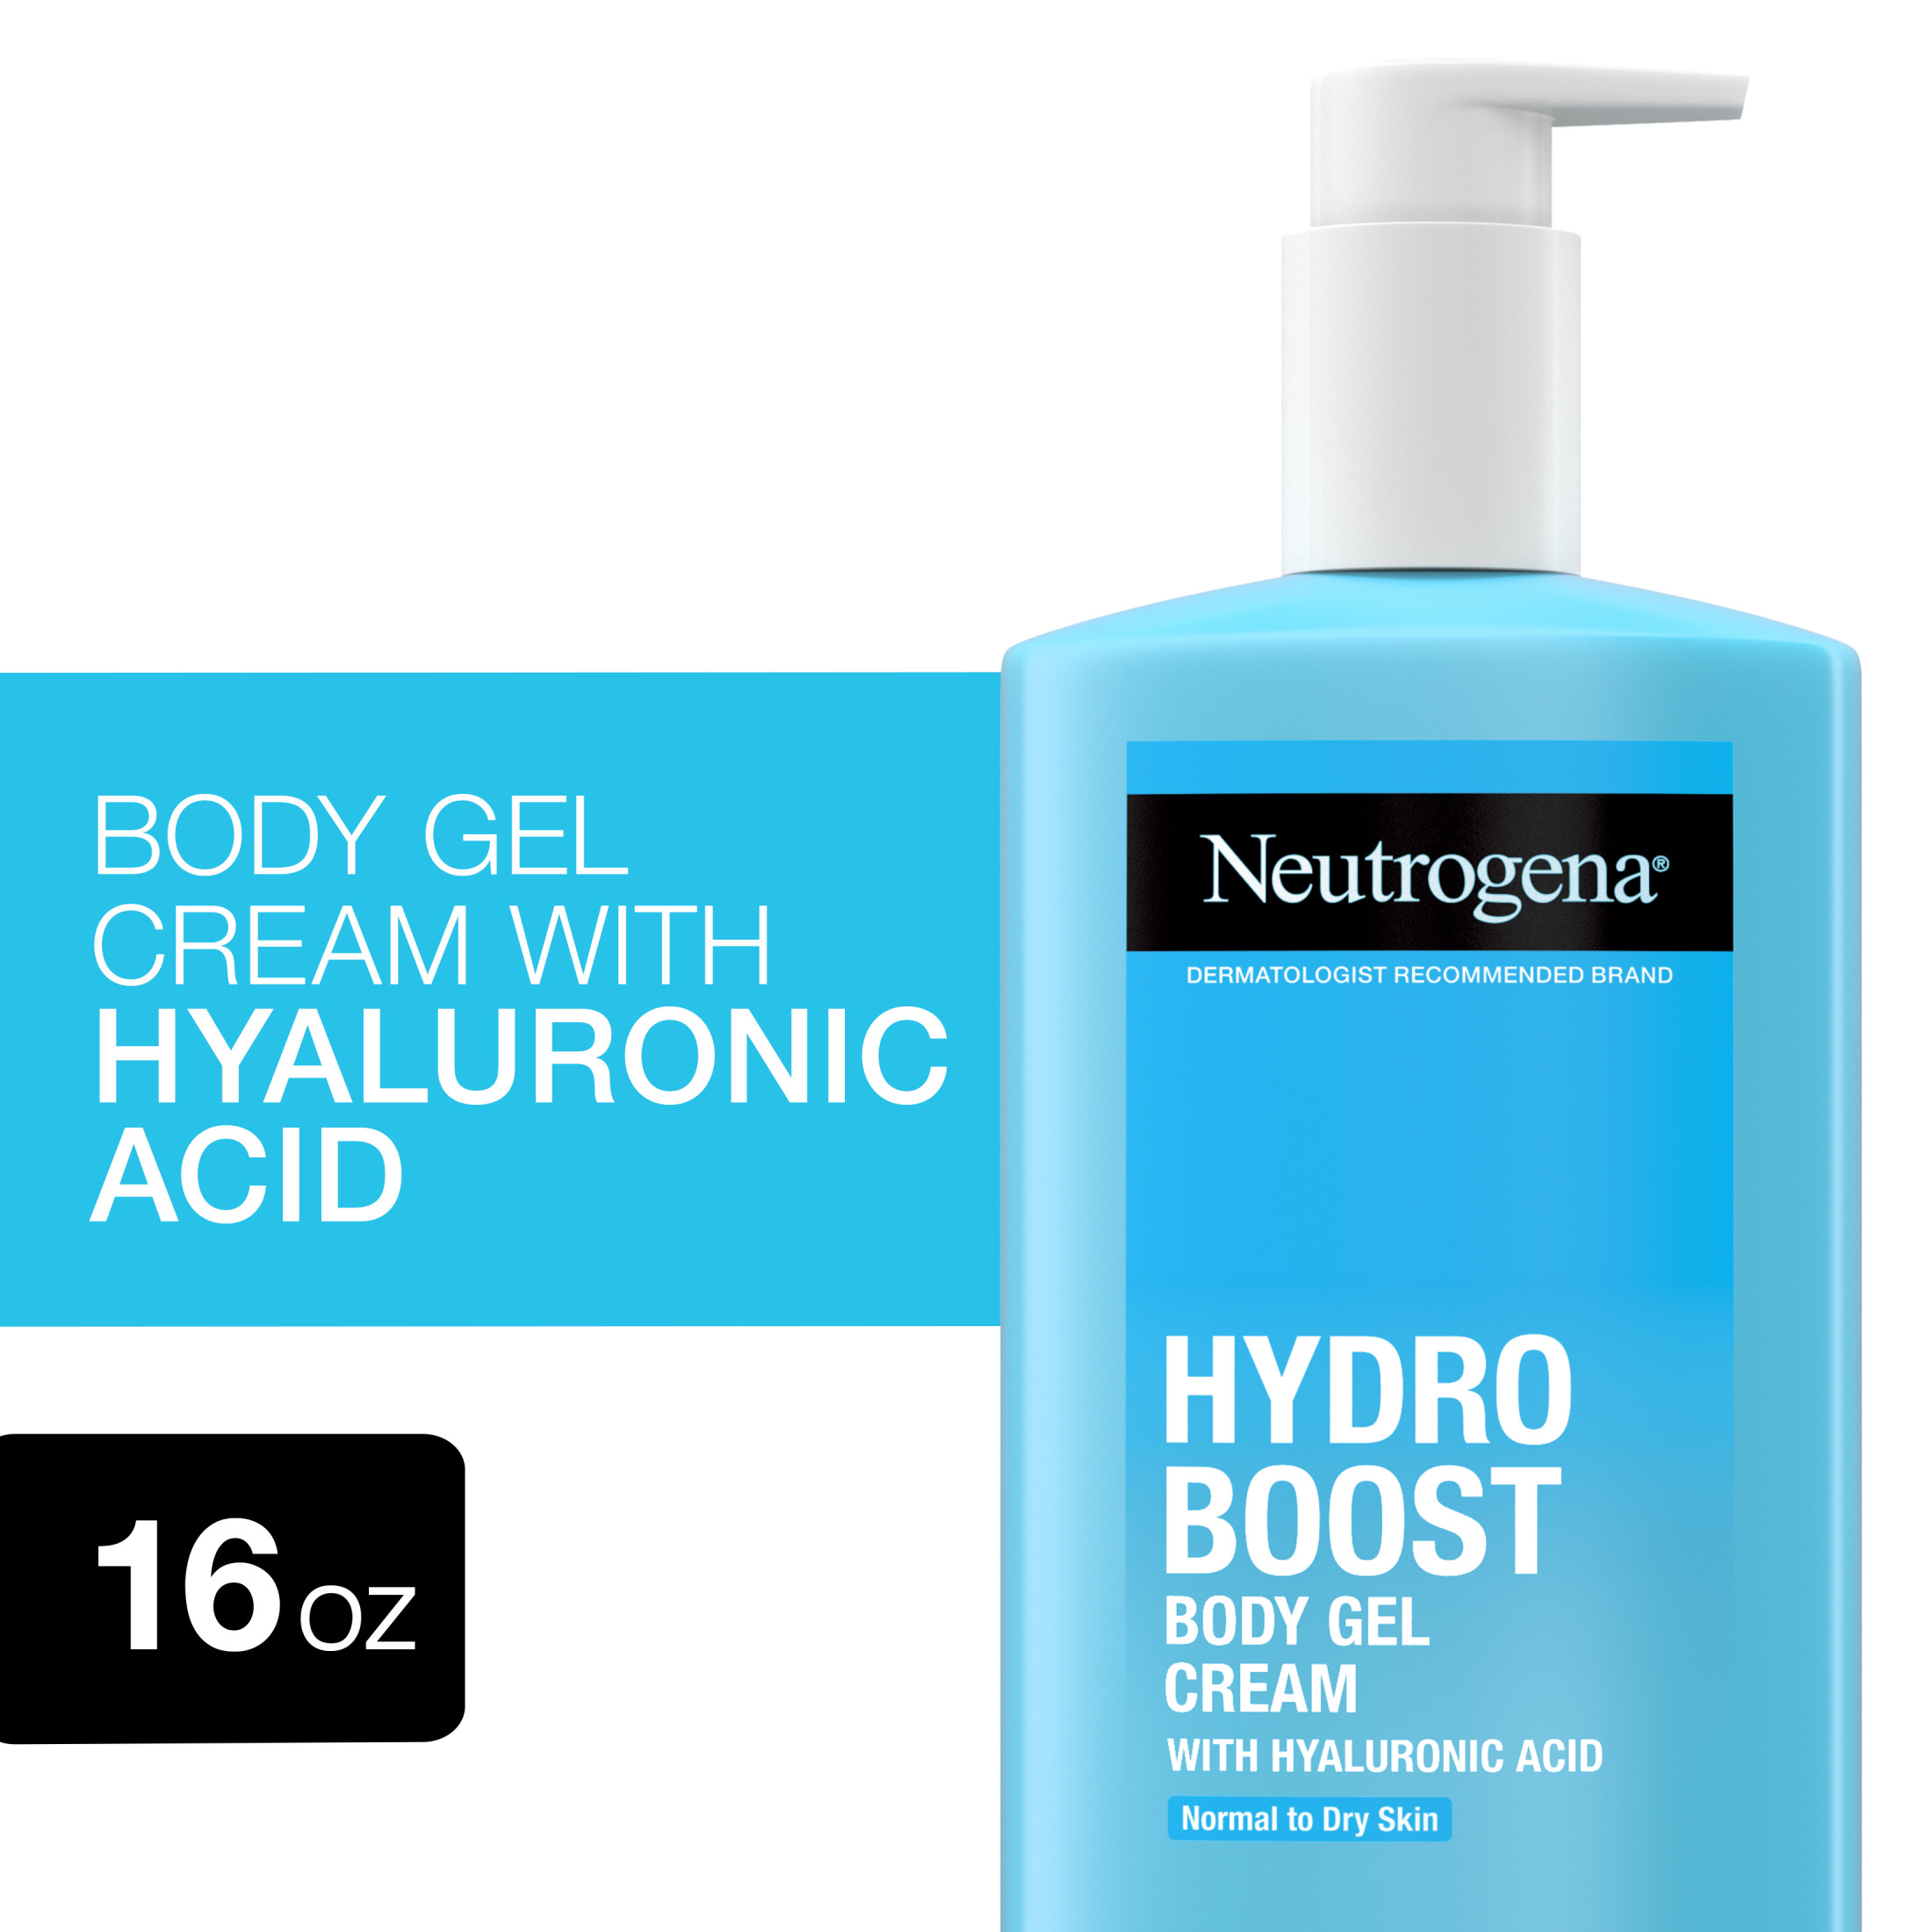 Neutrogena Hydro Boost Body Gel Cream with Hyaluronic Acid, 16 oz - image 1 of 11